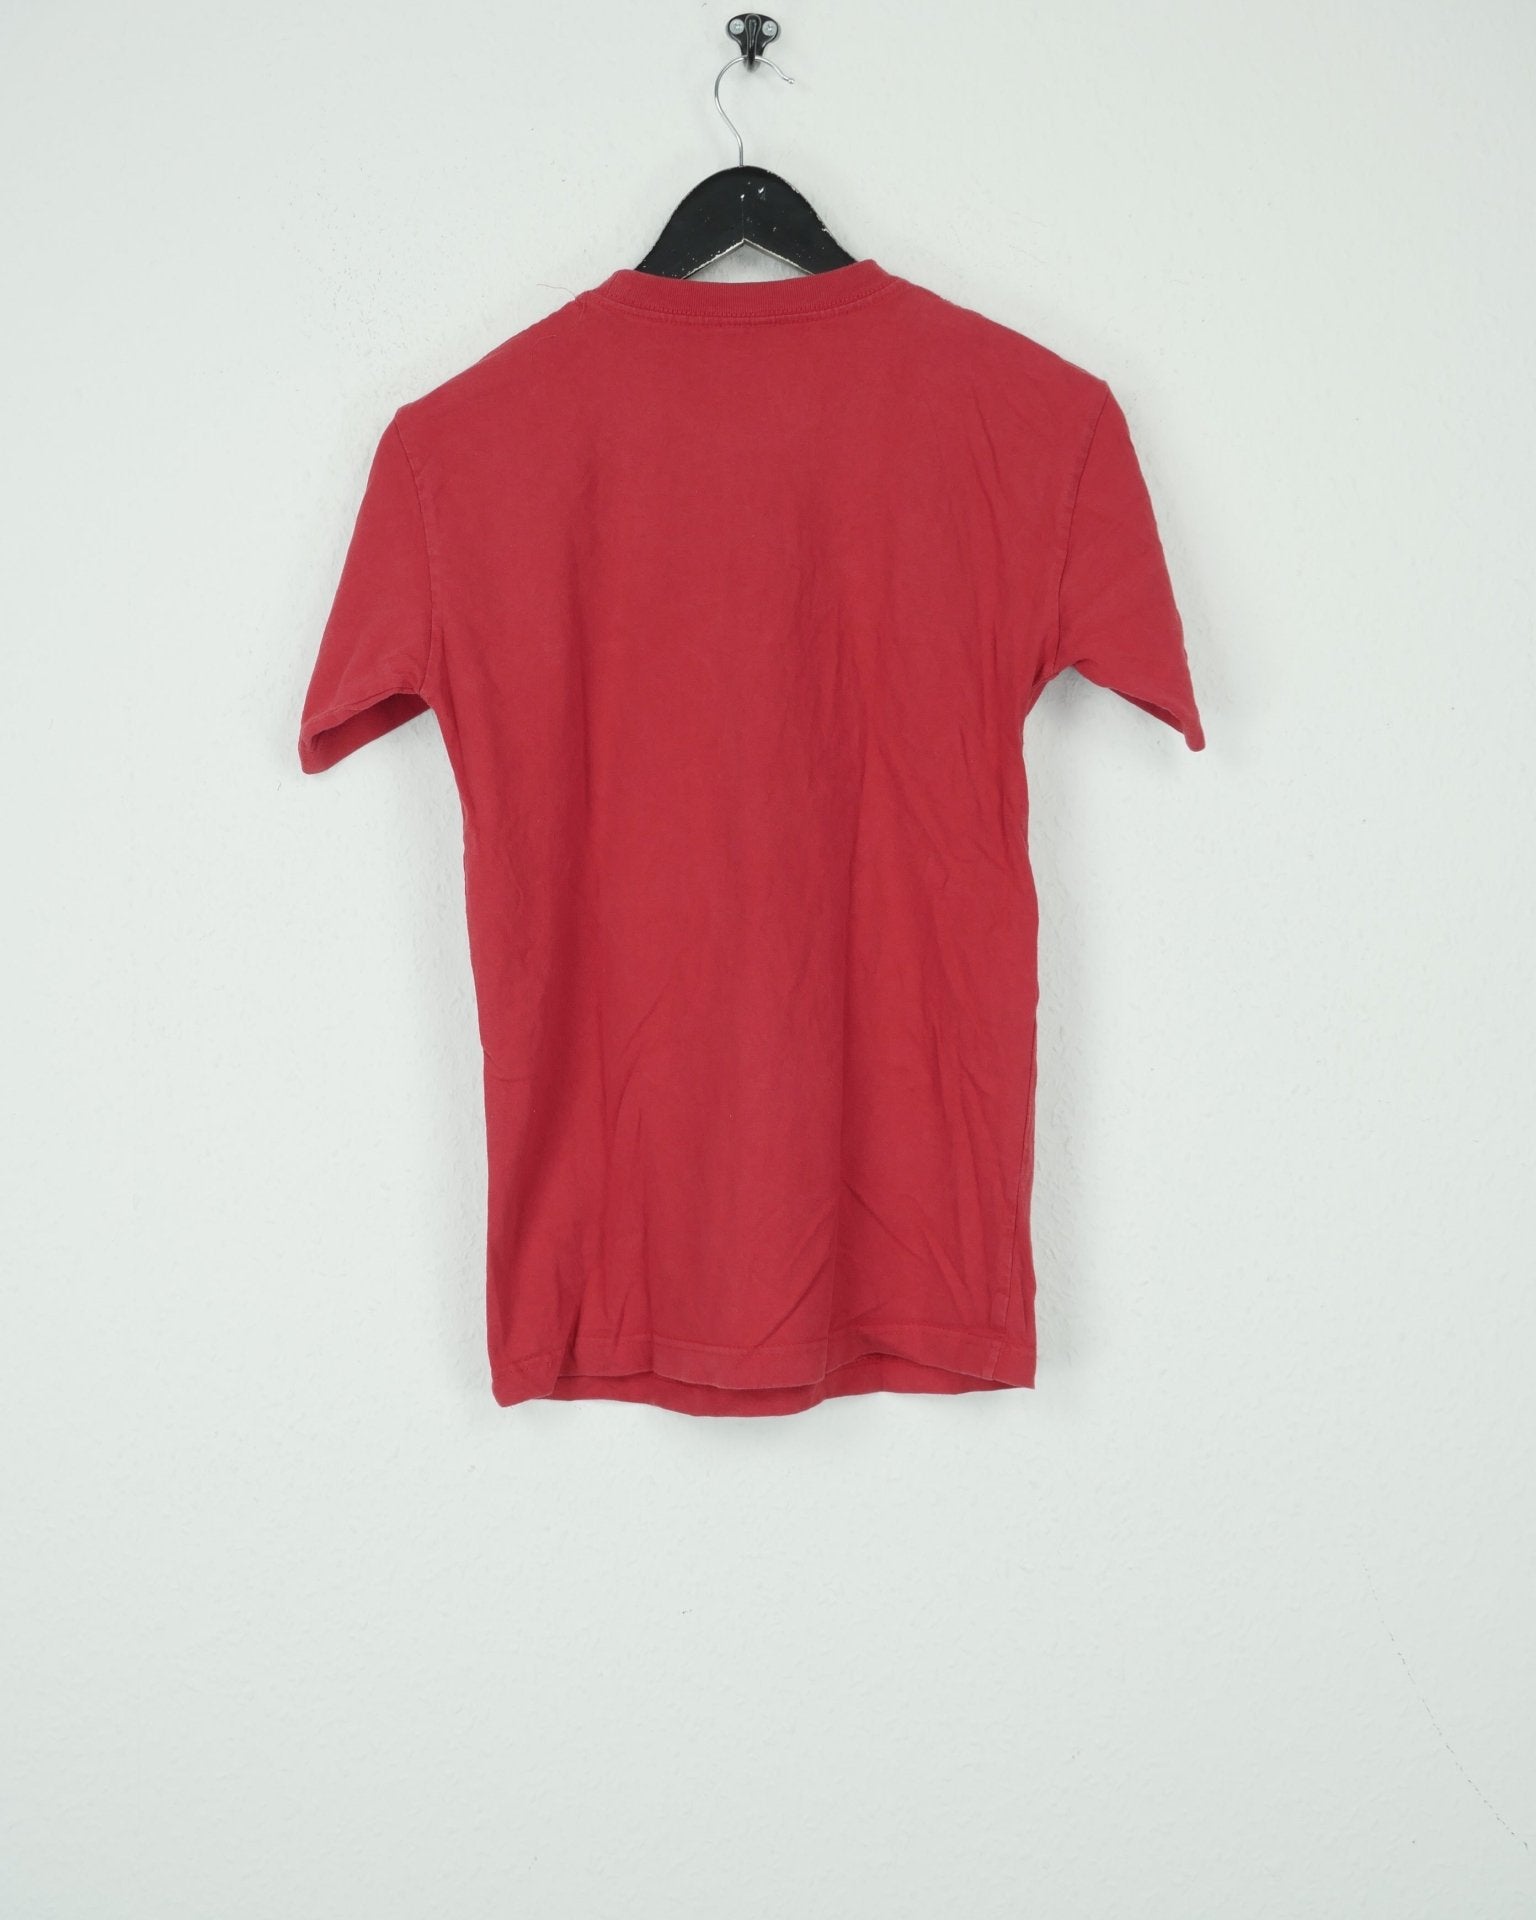 Teemax North Dakota PGS printed Logo red shirt - Peeces